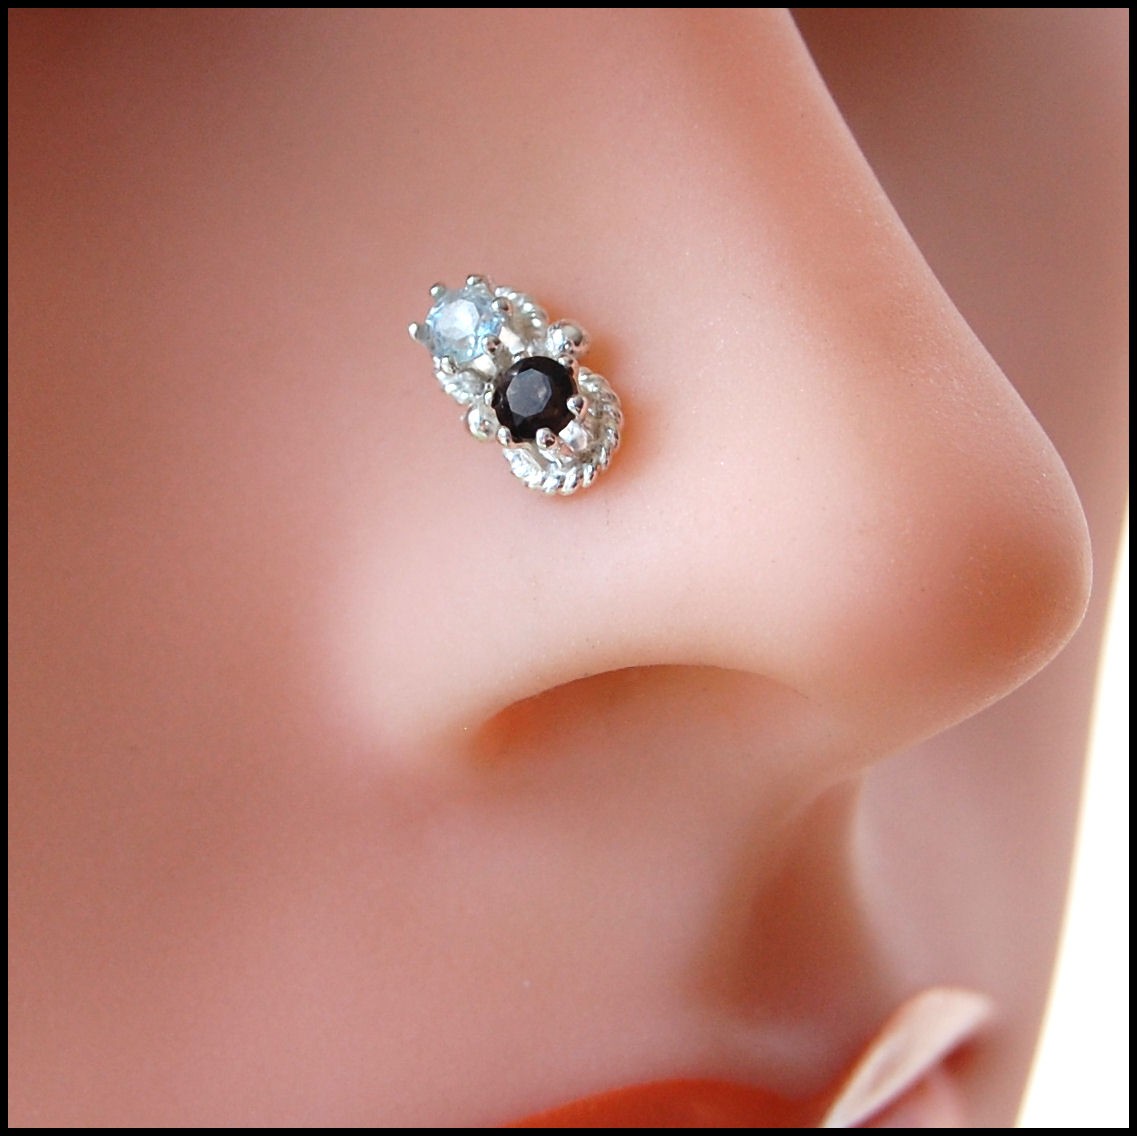 Women Beauty Tips: 10+ Unique Nose Piercing Jewelry